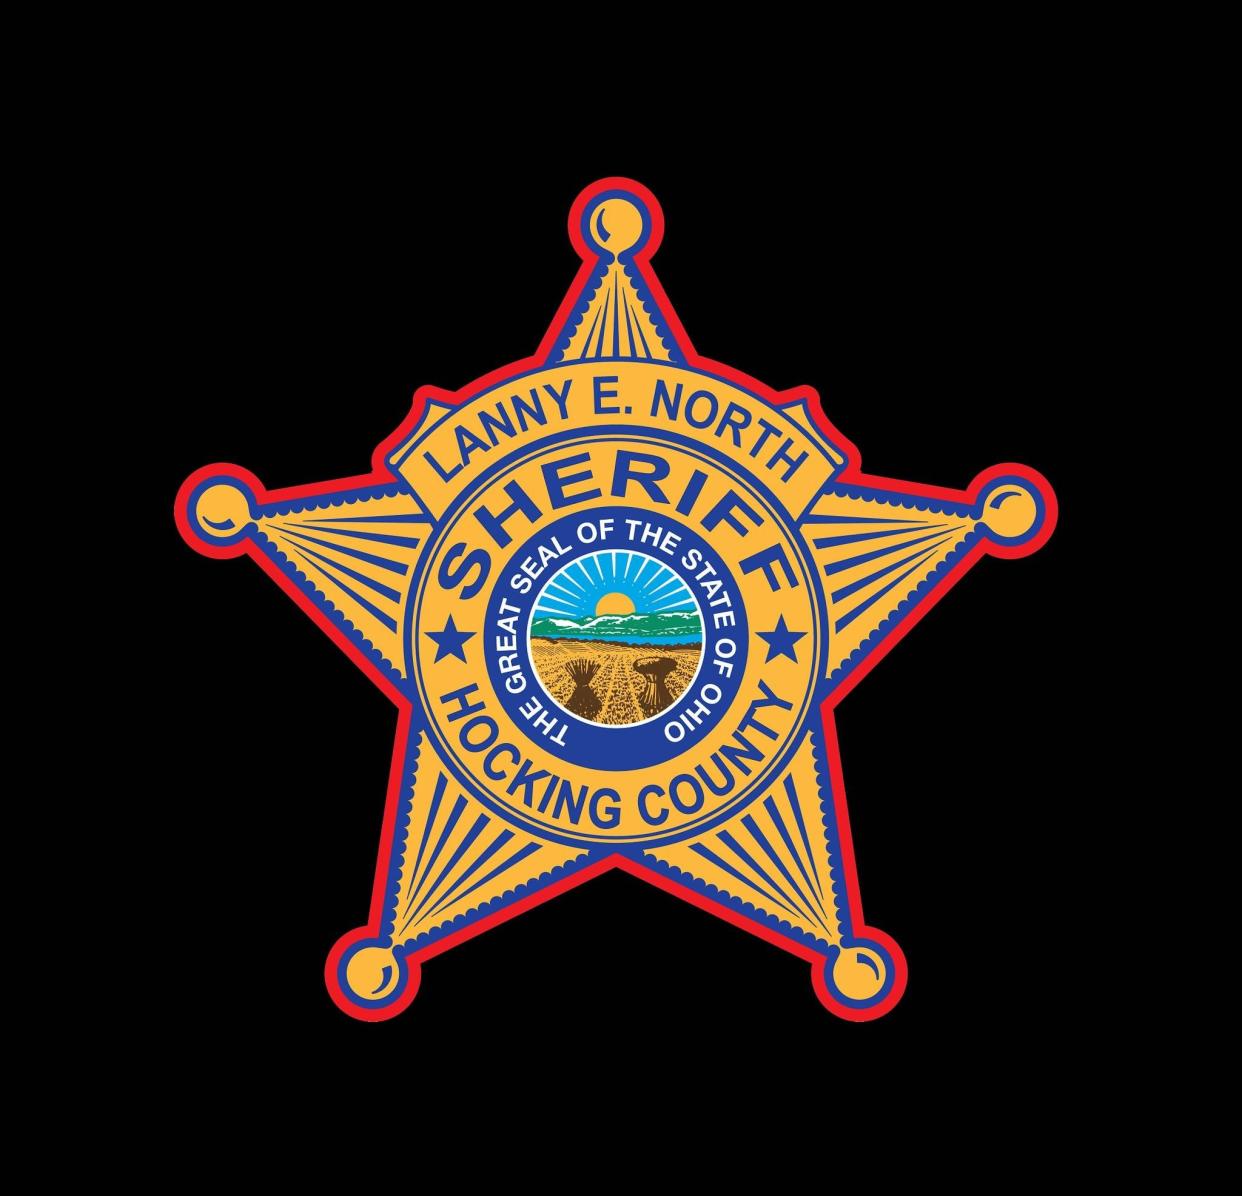 Hocking County Sheriff's office logo